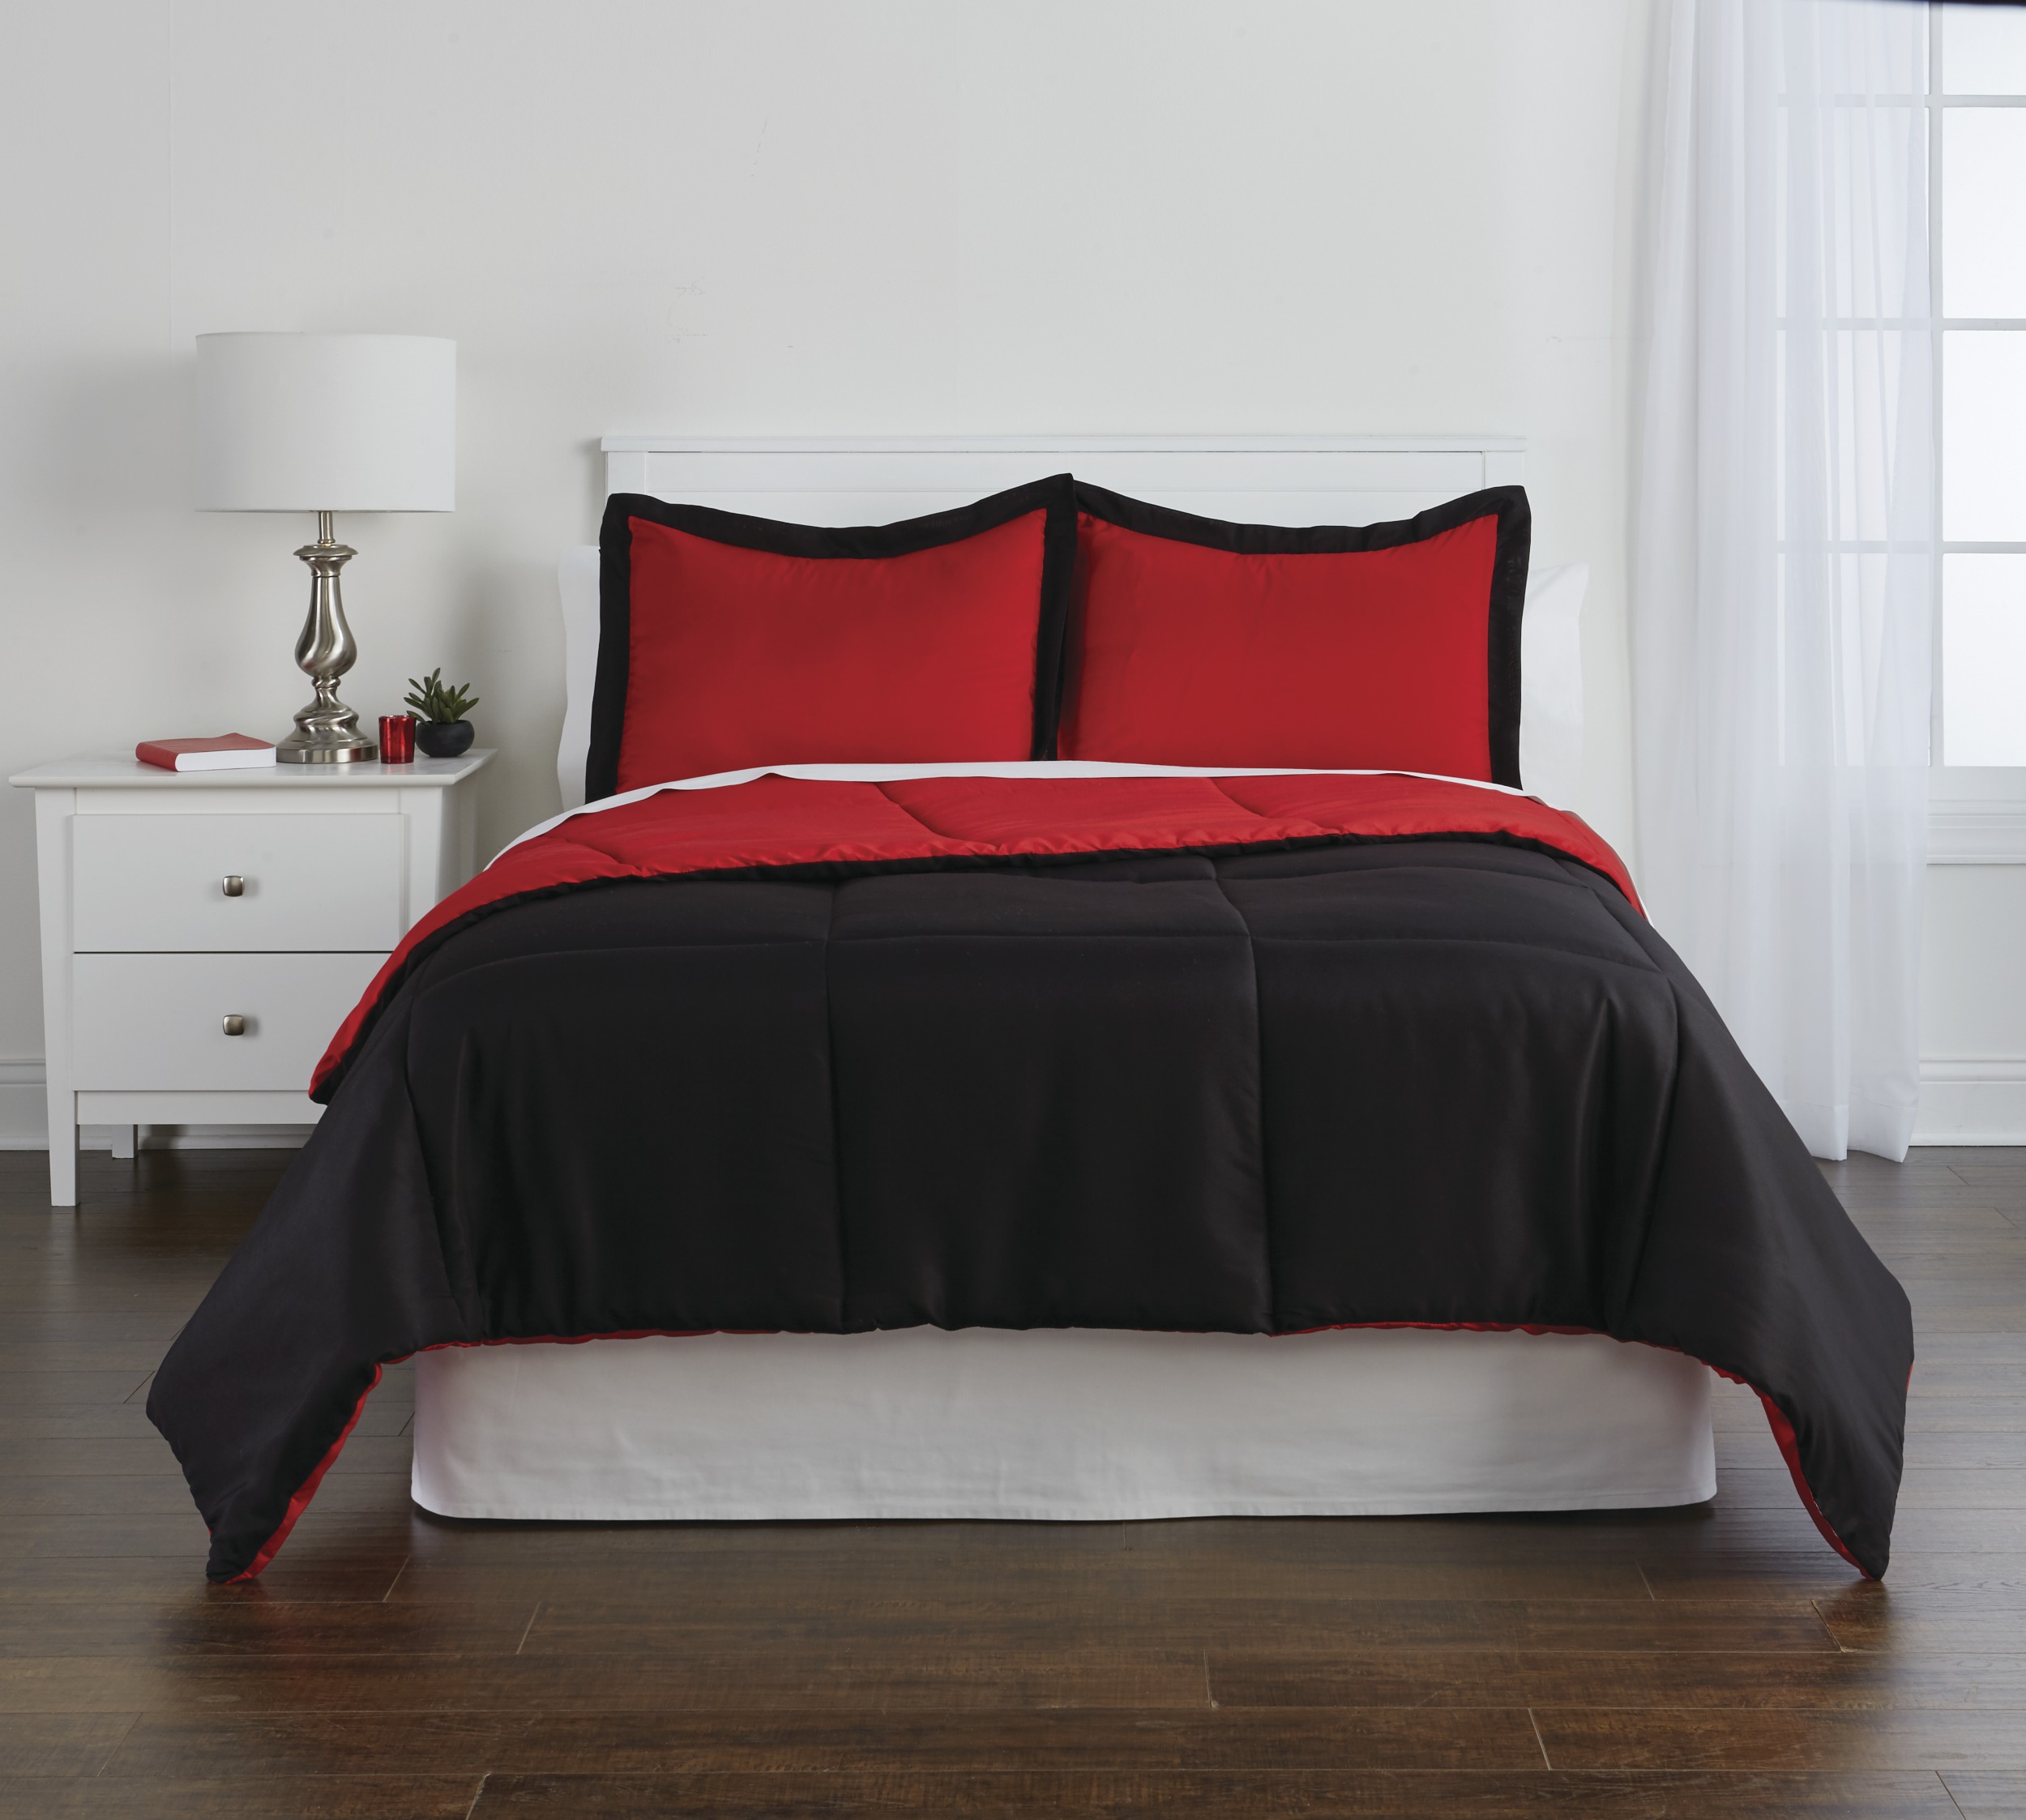 Colormate Reversible Comforter Set - Black/Red